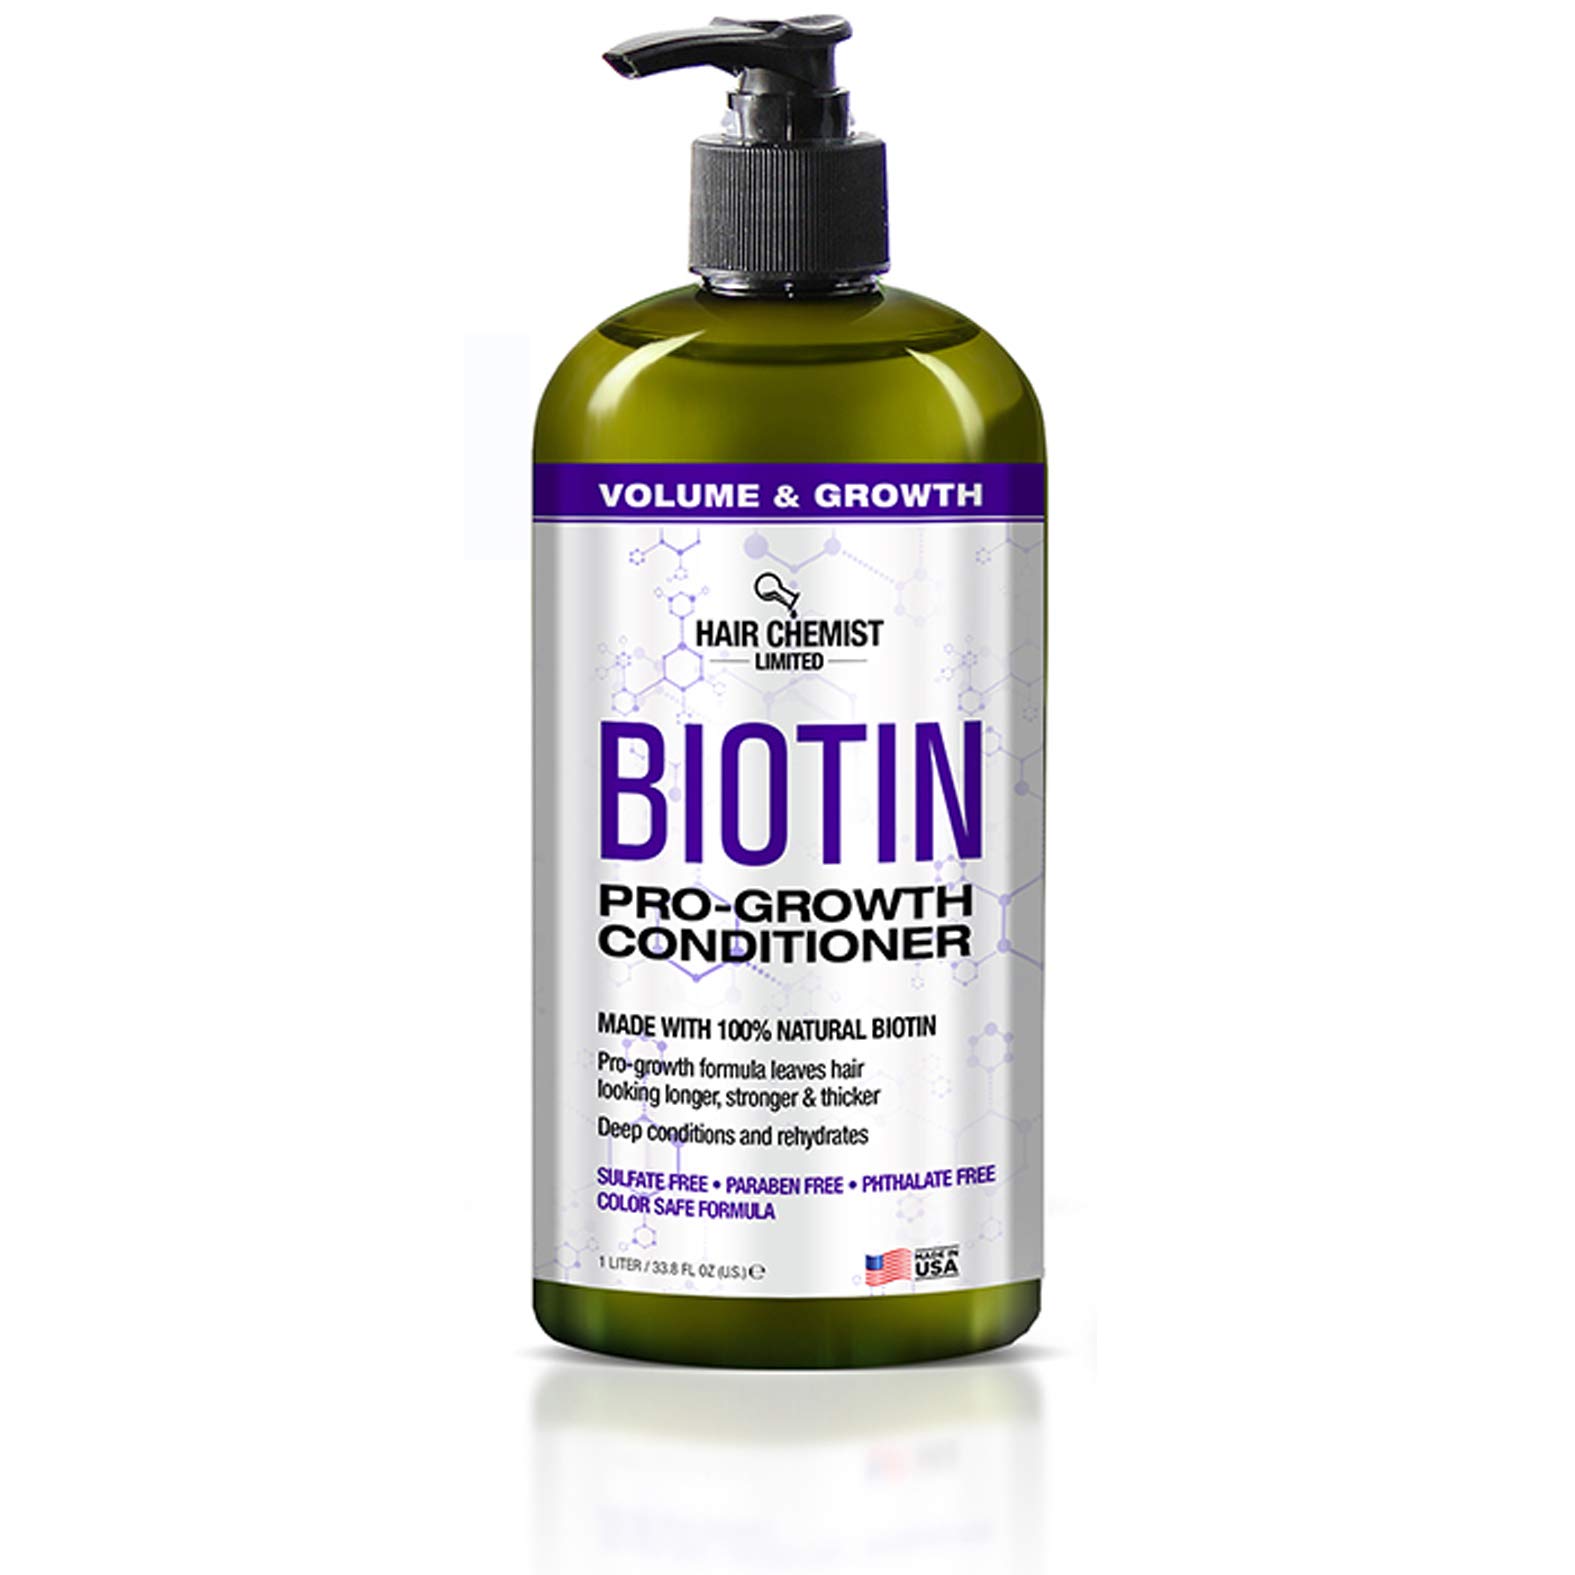 Hair Chemist Biotin Pro-Growth Shampoo & Conditioner 2-PC Gift Set - Includes 33.8oz Shampoo & 33.8oz Conditioner